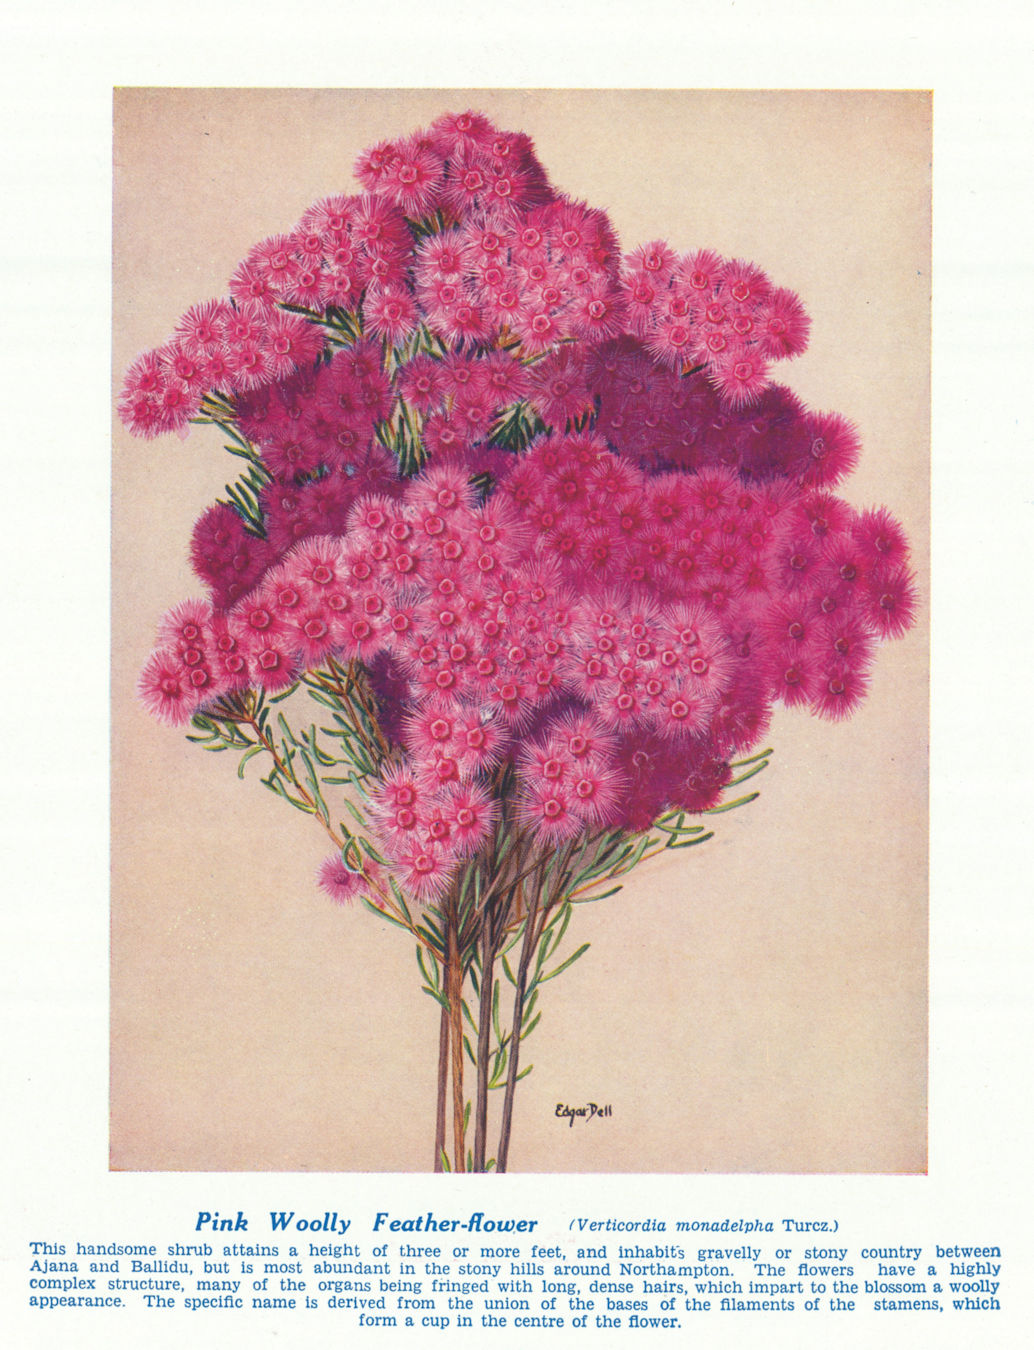 Pink Woolly Feather-flower (Verticordia monadelpha). Australian Wild Flower 1950